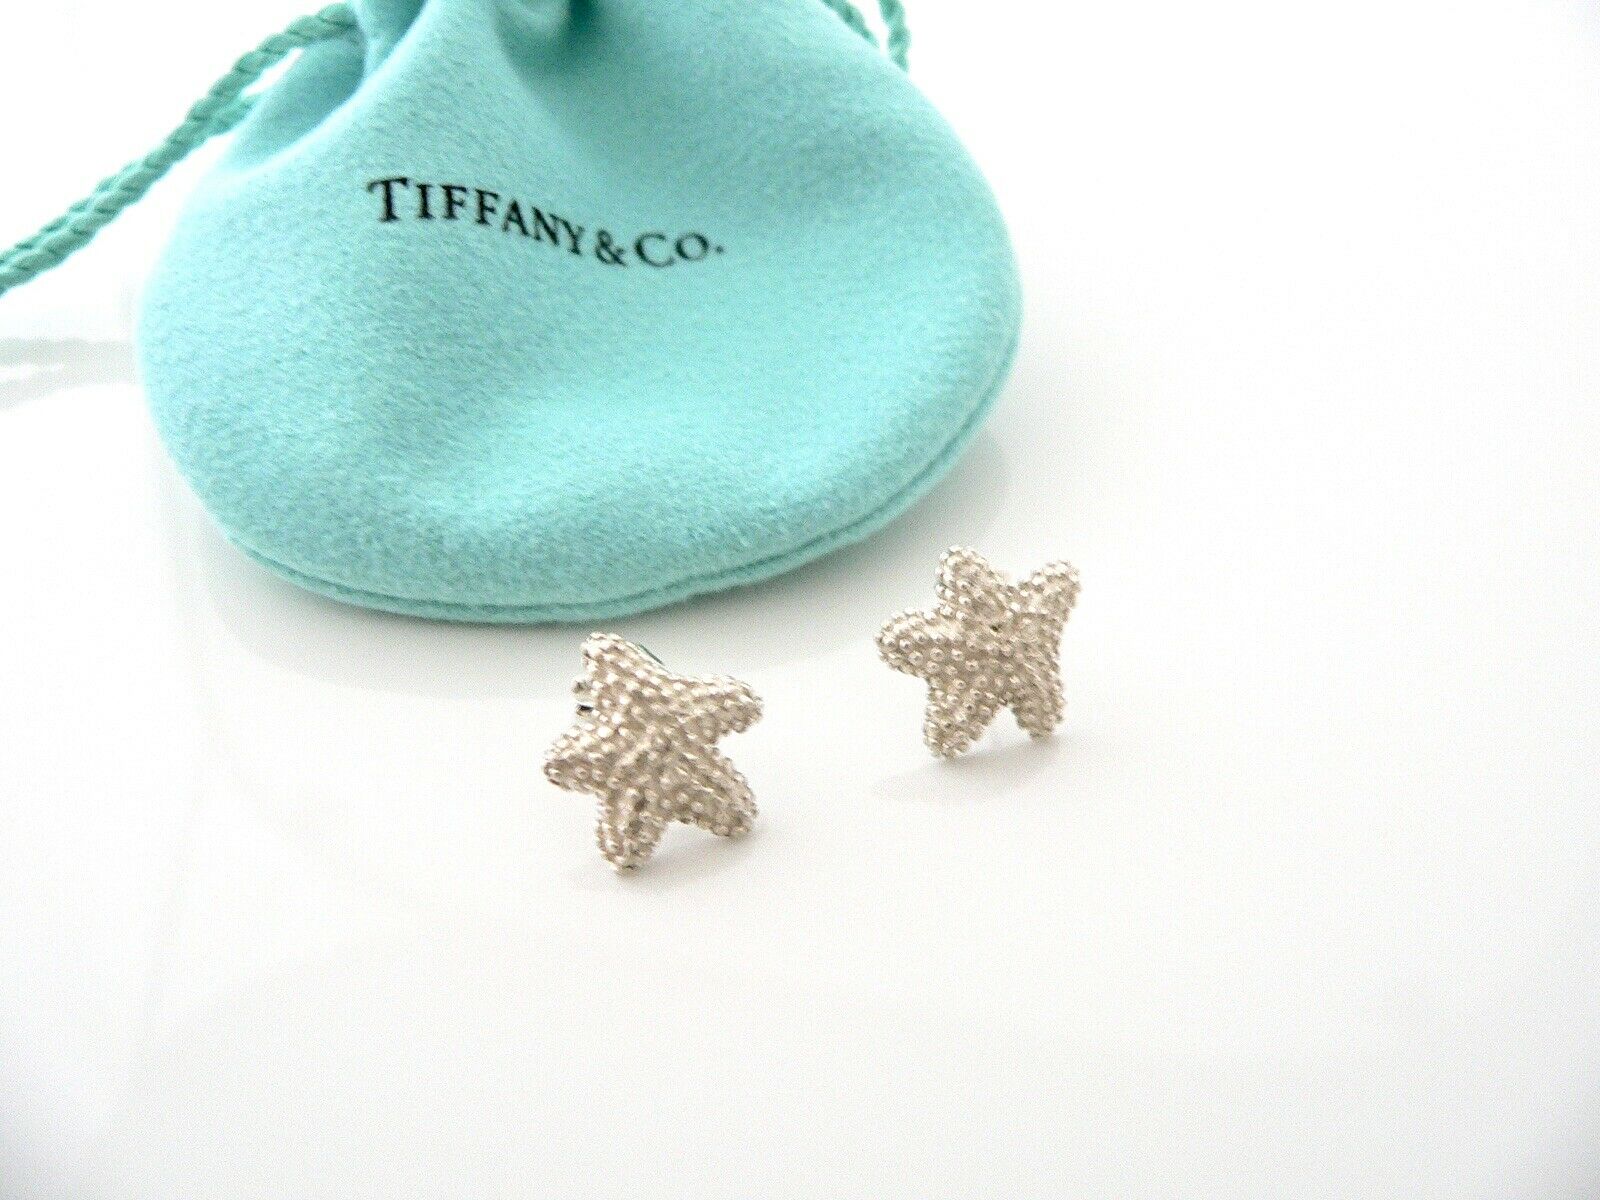 Tiffany & Co Bumpy Starfish Star Fish Earrings Studs Ocean Sea Lover Silver Gift